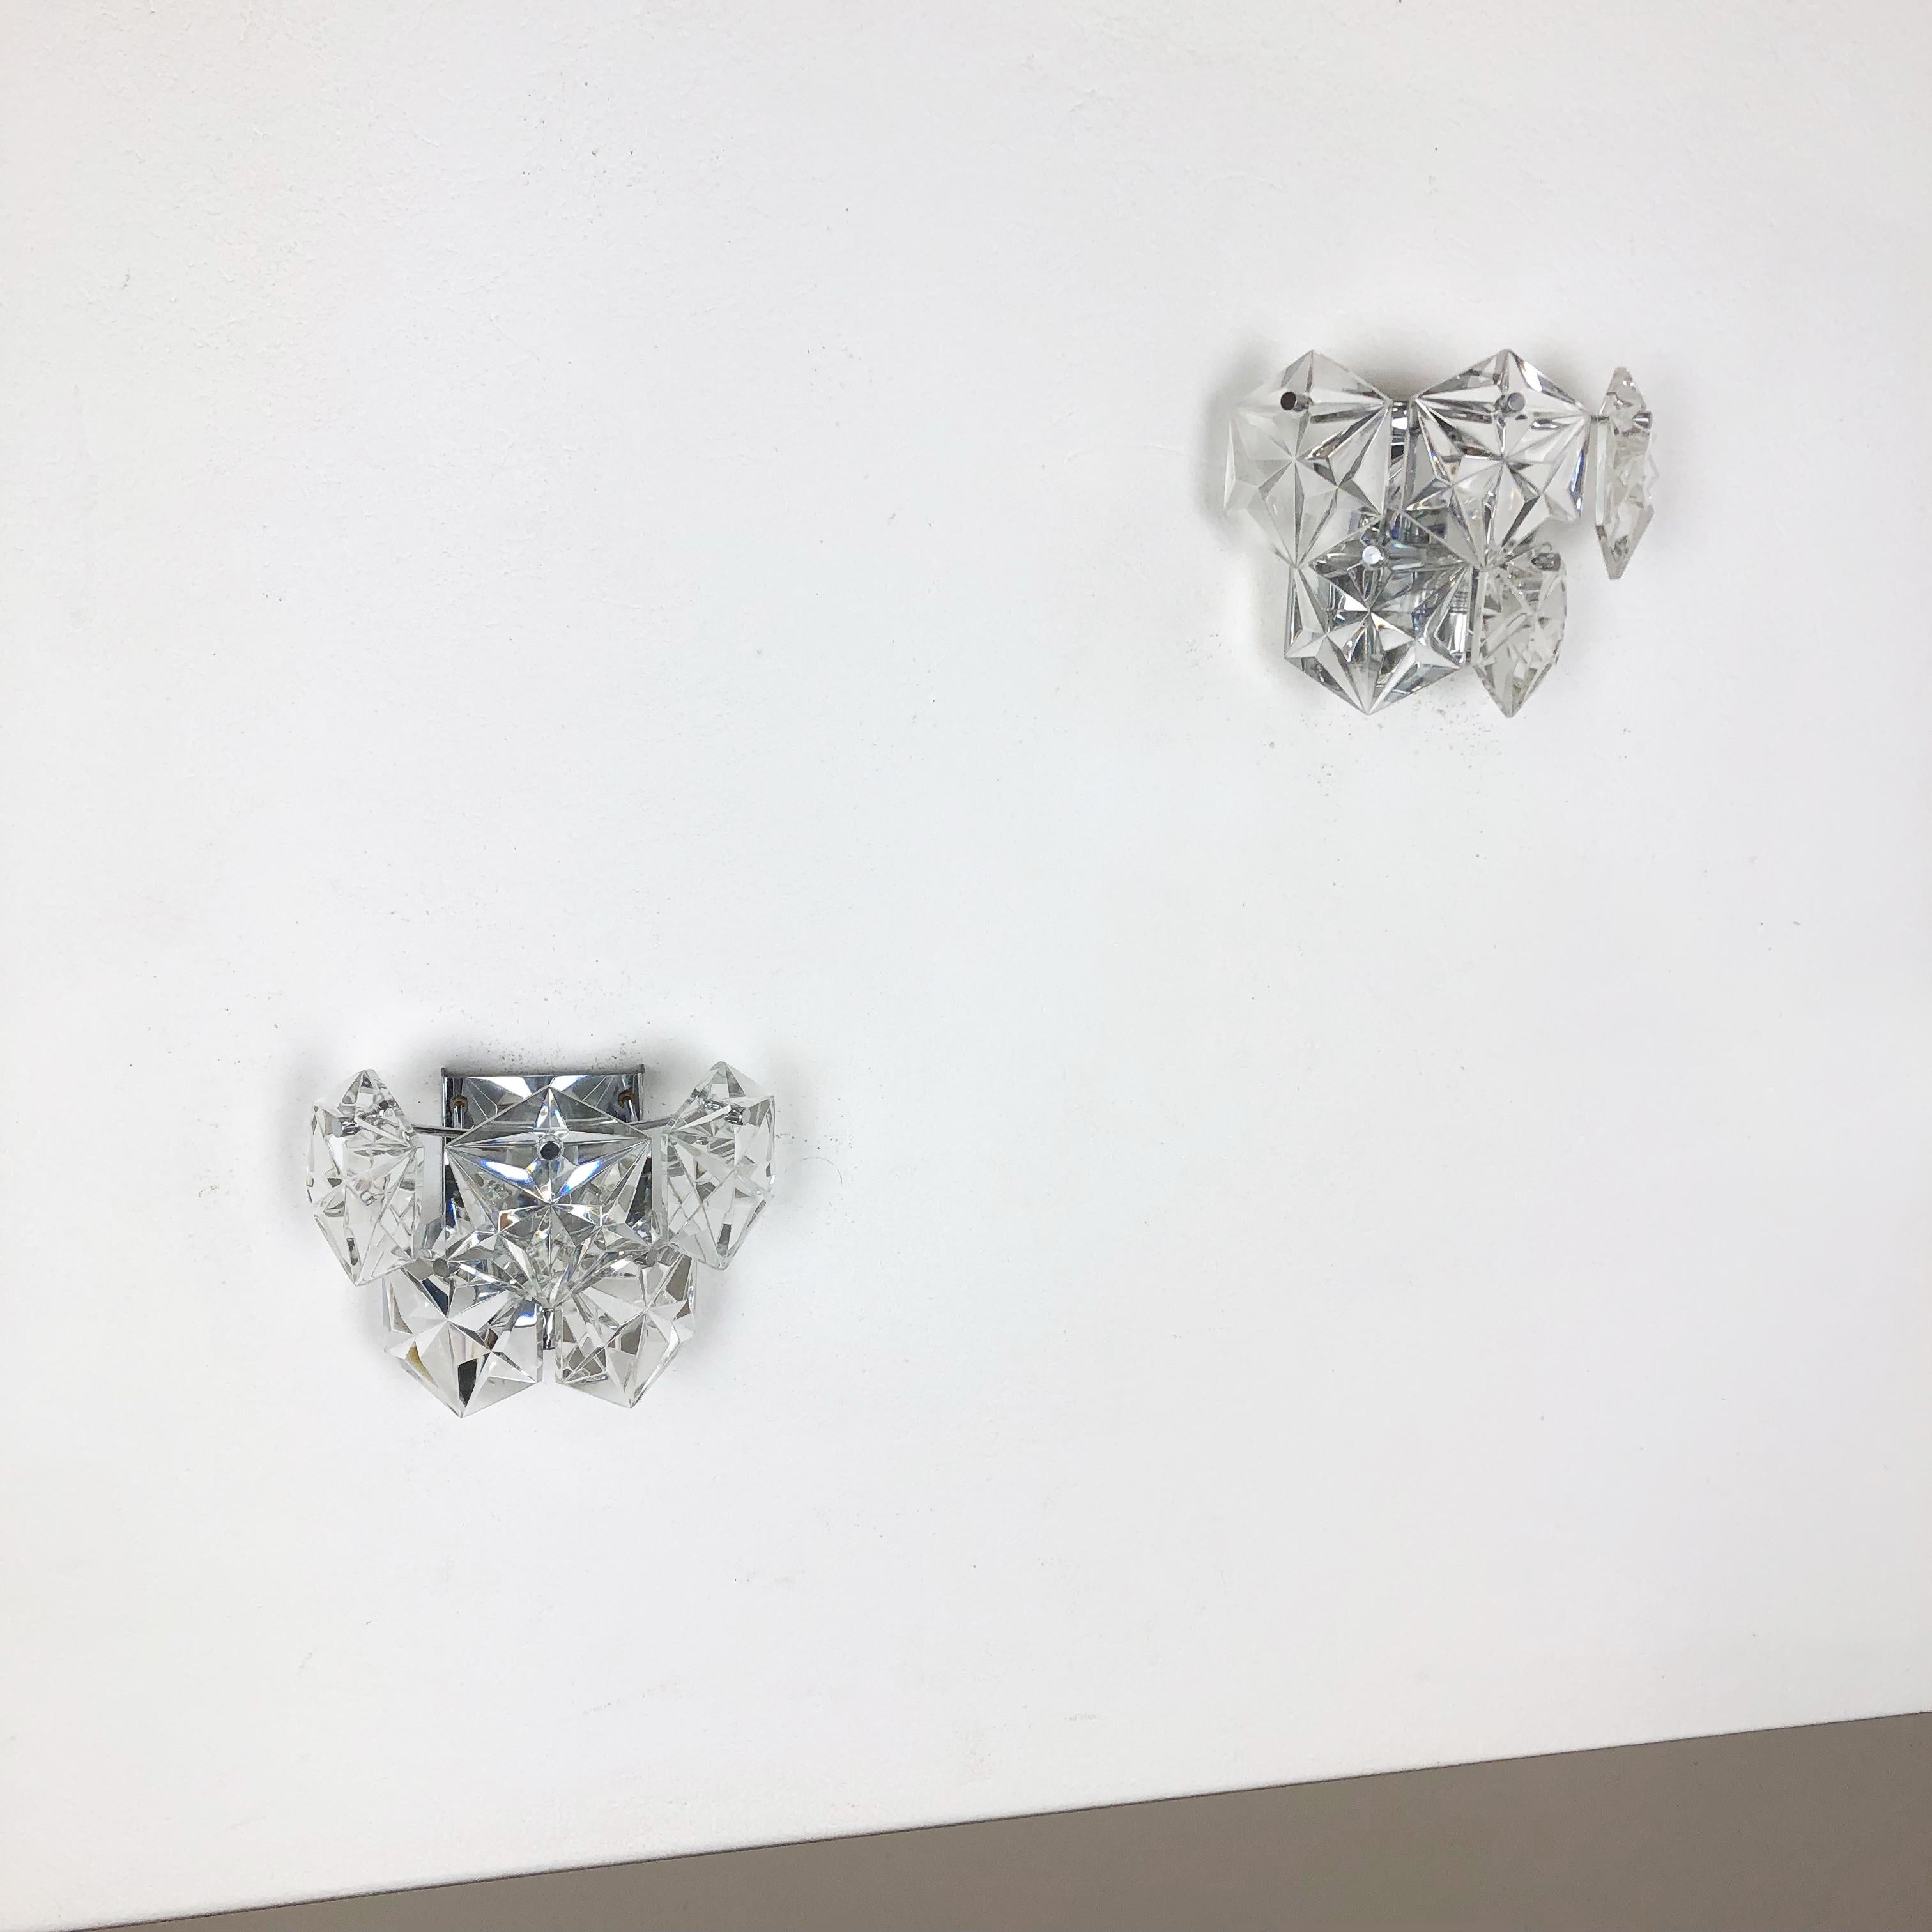 Set of 2 Prismatic Crystal Glass Wall Light Sconces by Kinkeldey, Germany No. 1 7